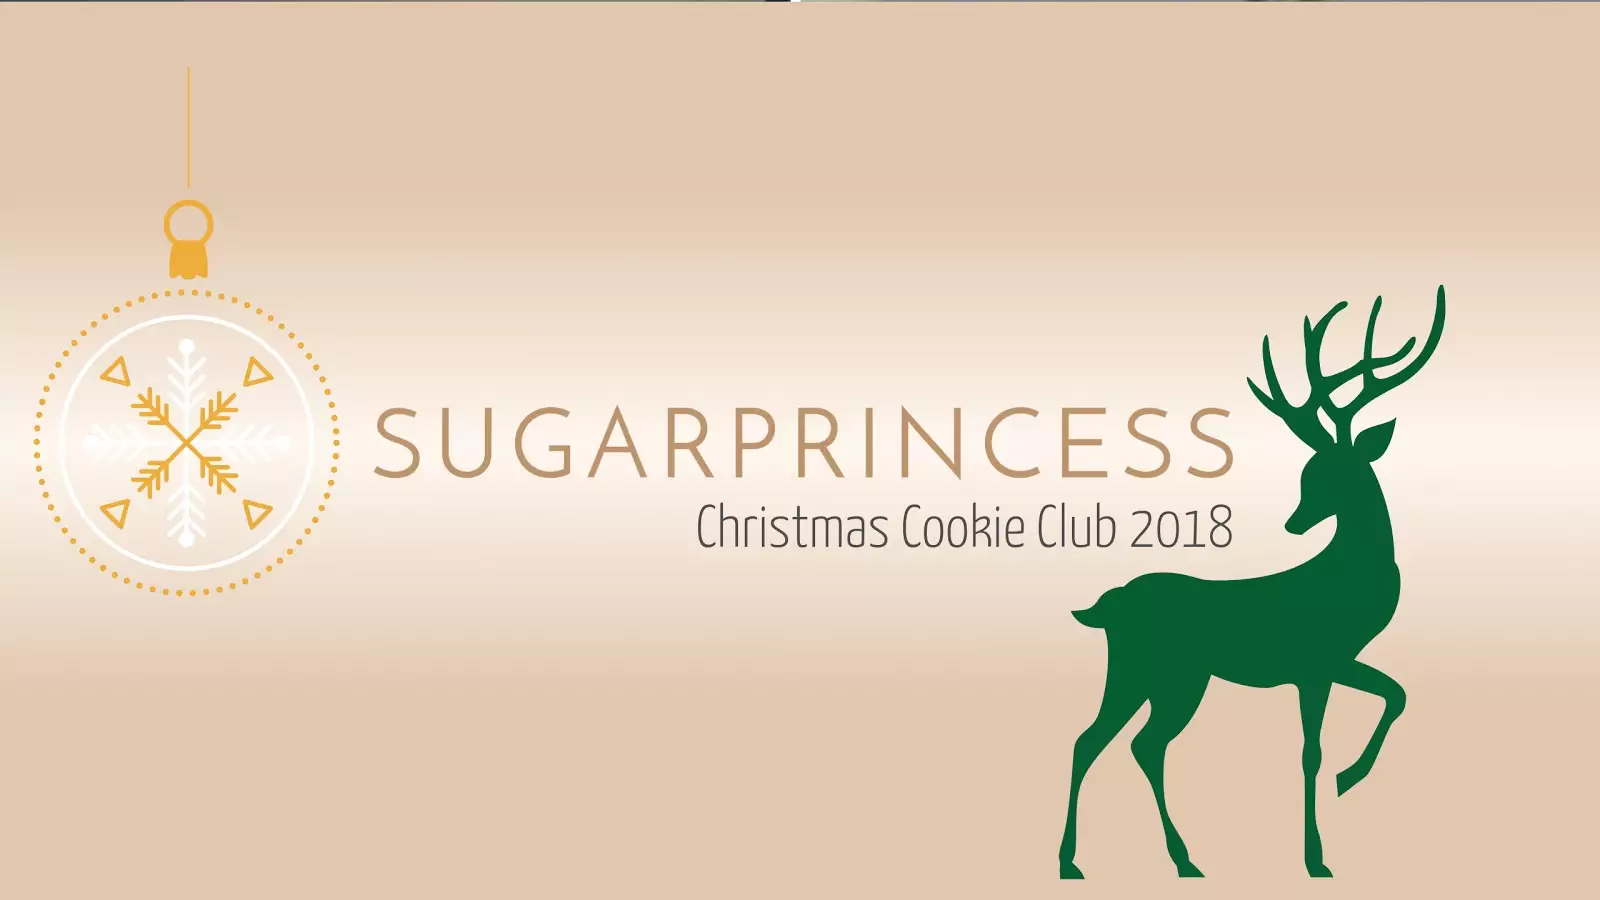 The Sugarprincess Christmas Cookie Club 2018: Adventskalender mit großem Gewinnspiel | Werbung